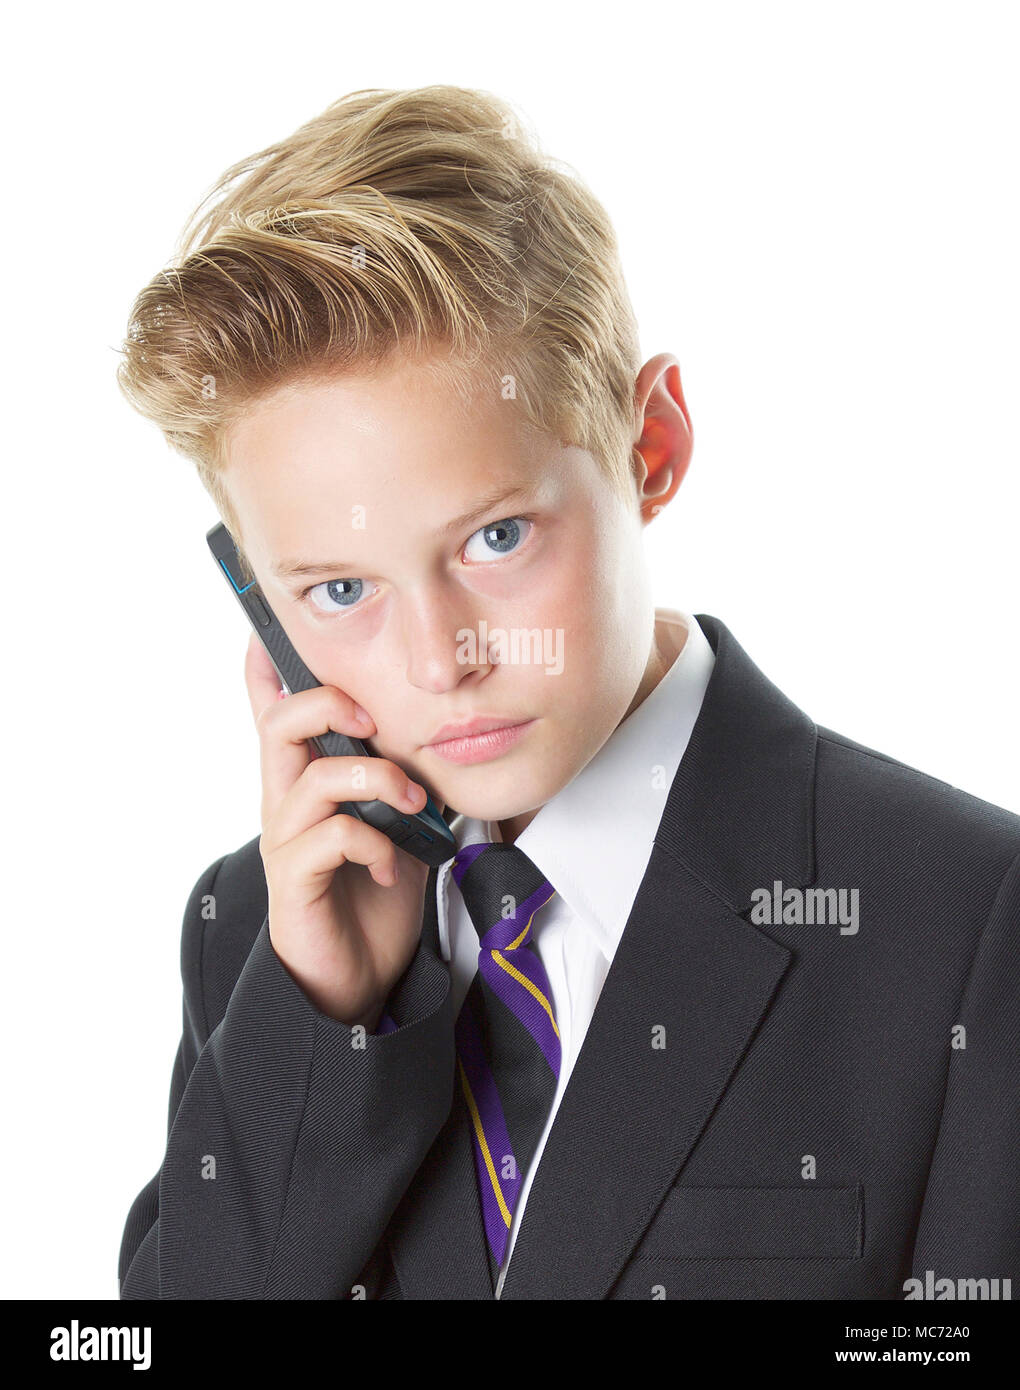 School boy in uniform on mobile phone Stock Photo